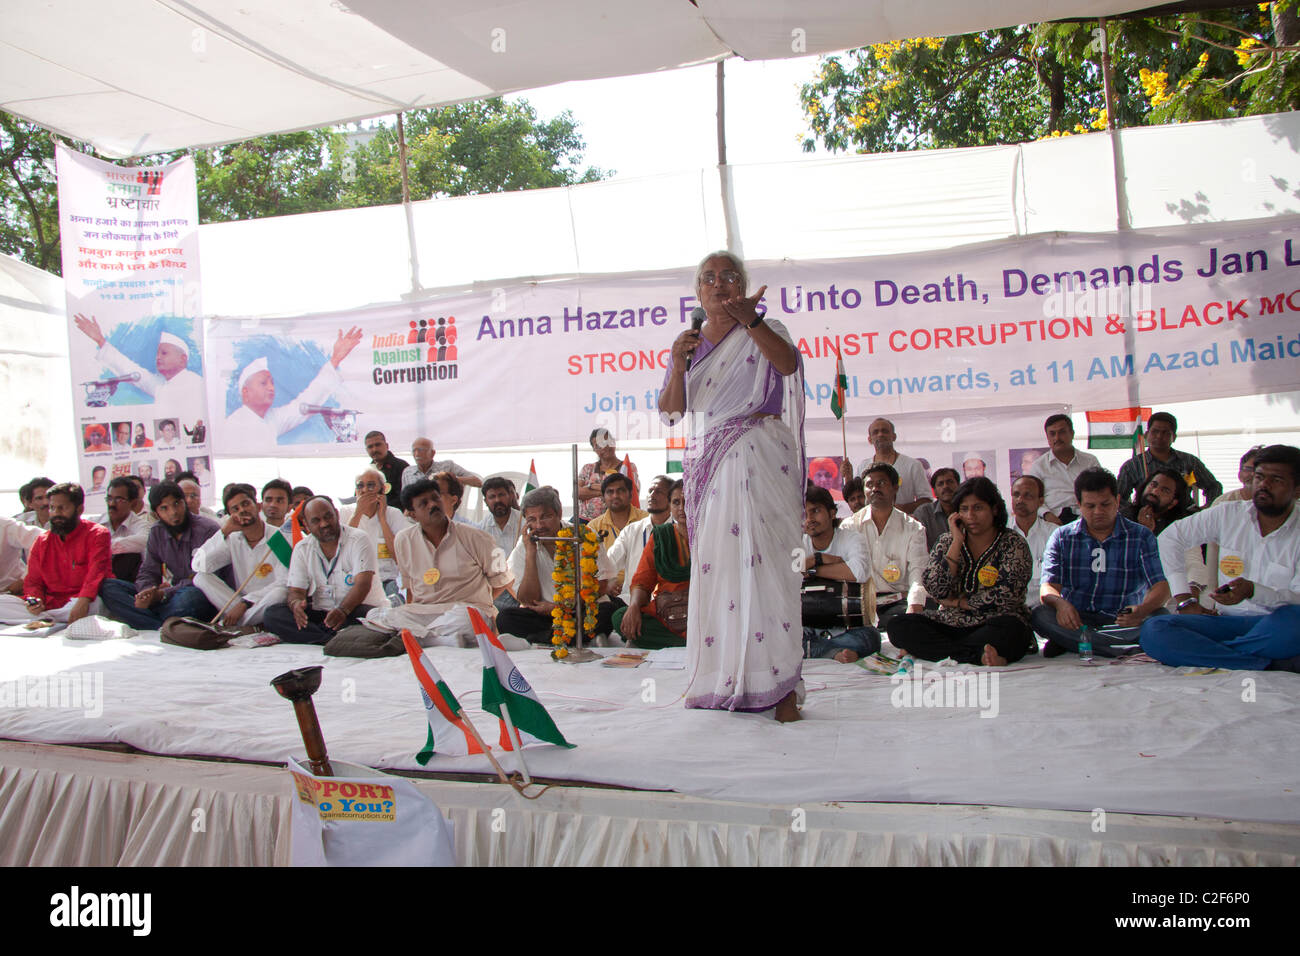 Social activist, Medha Patkar, speaking in favor of the Anna Hazare movement against corruption at Azad Maidan, Mumbai, India. Stock Photo